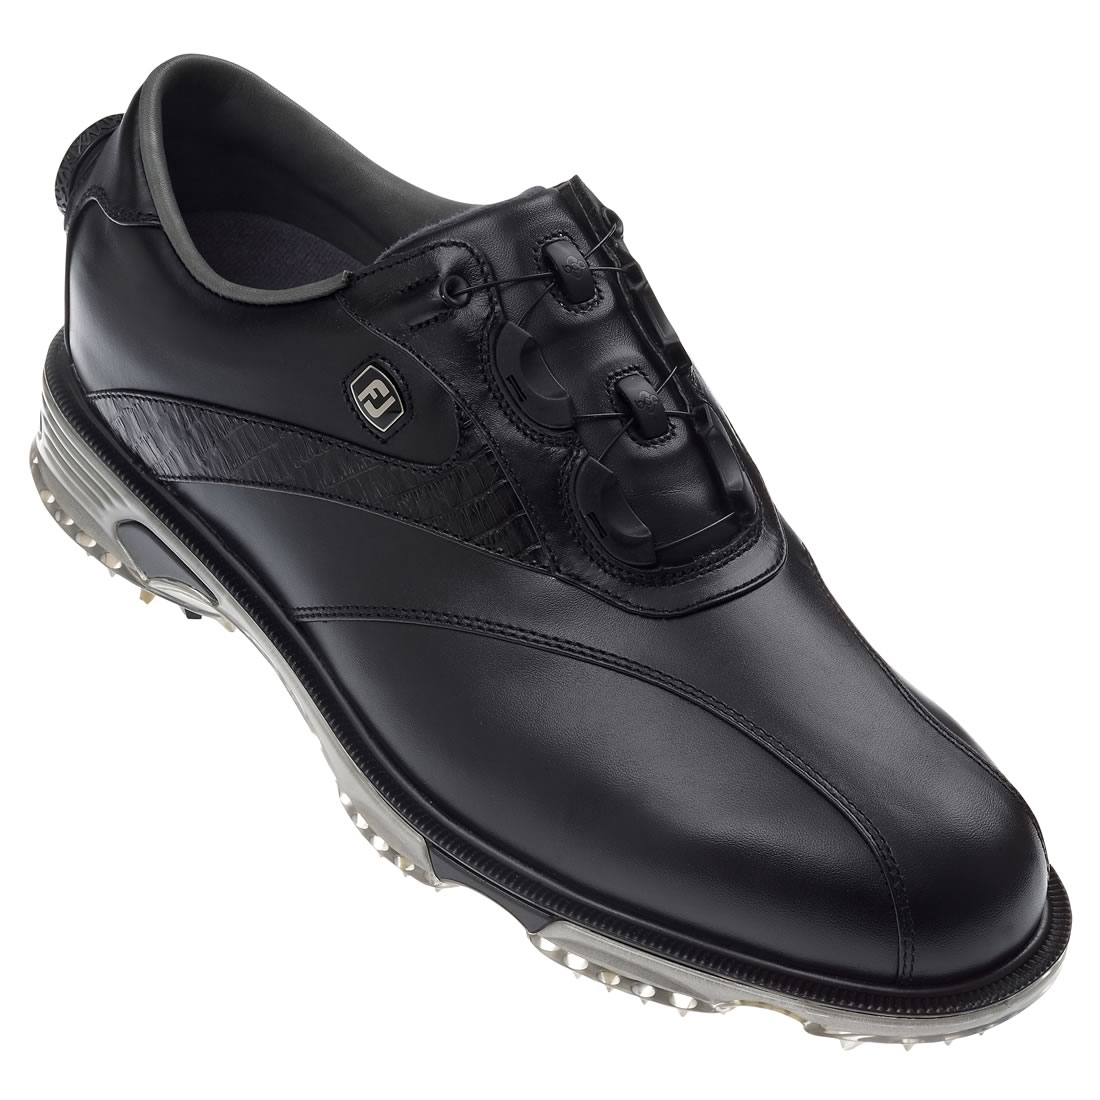 Dryjoys Tour Golf Shoes Black #53737